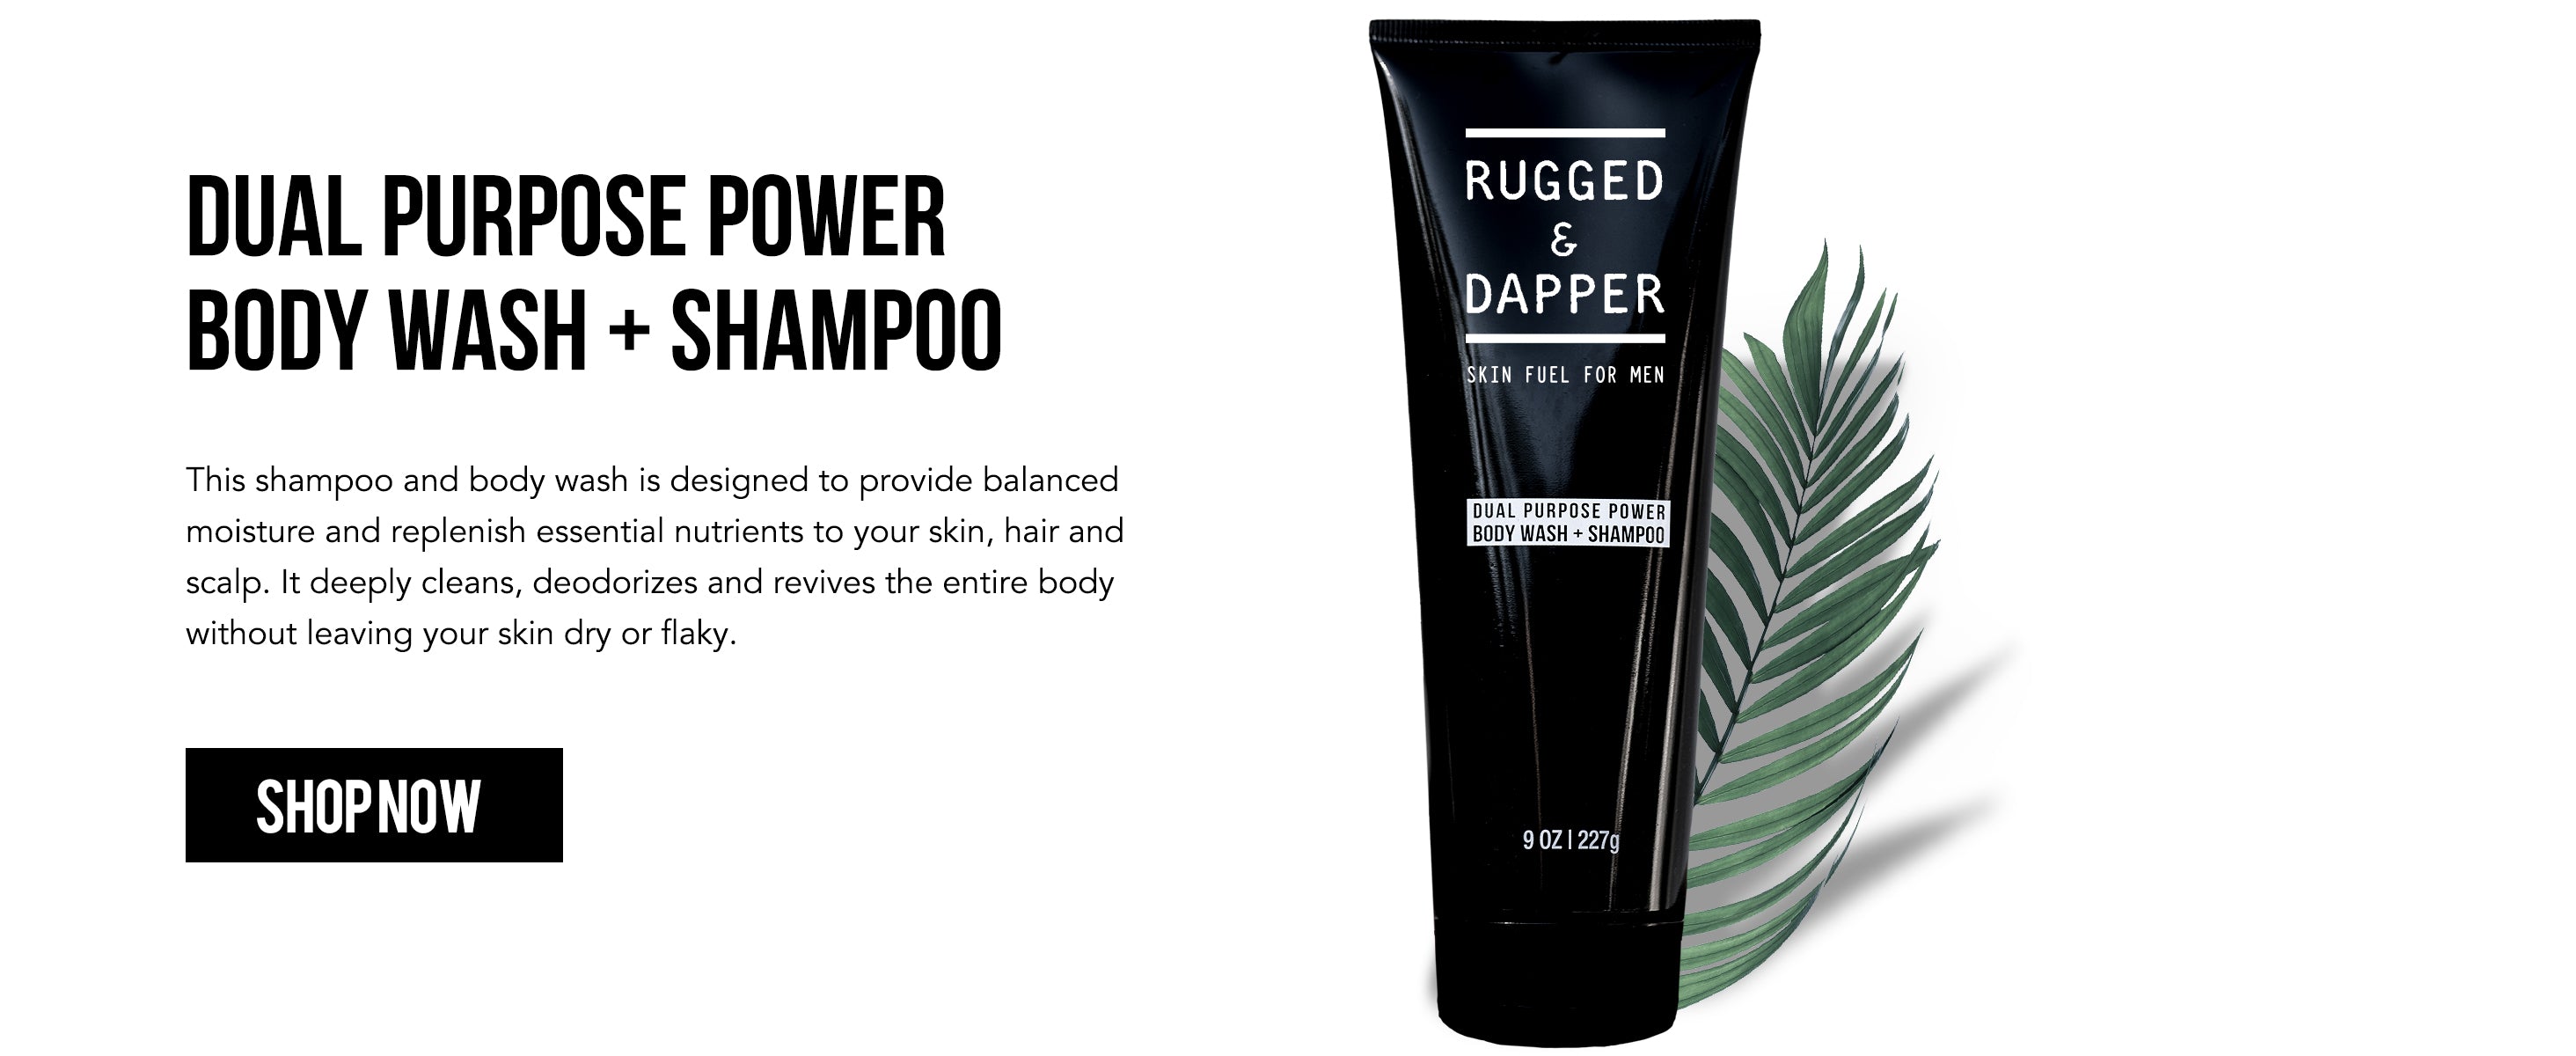 Dual Purpose Power Body Wash + Shampoo